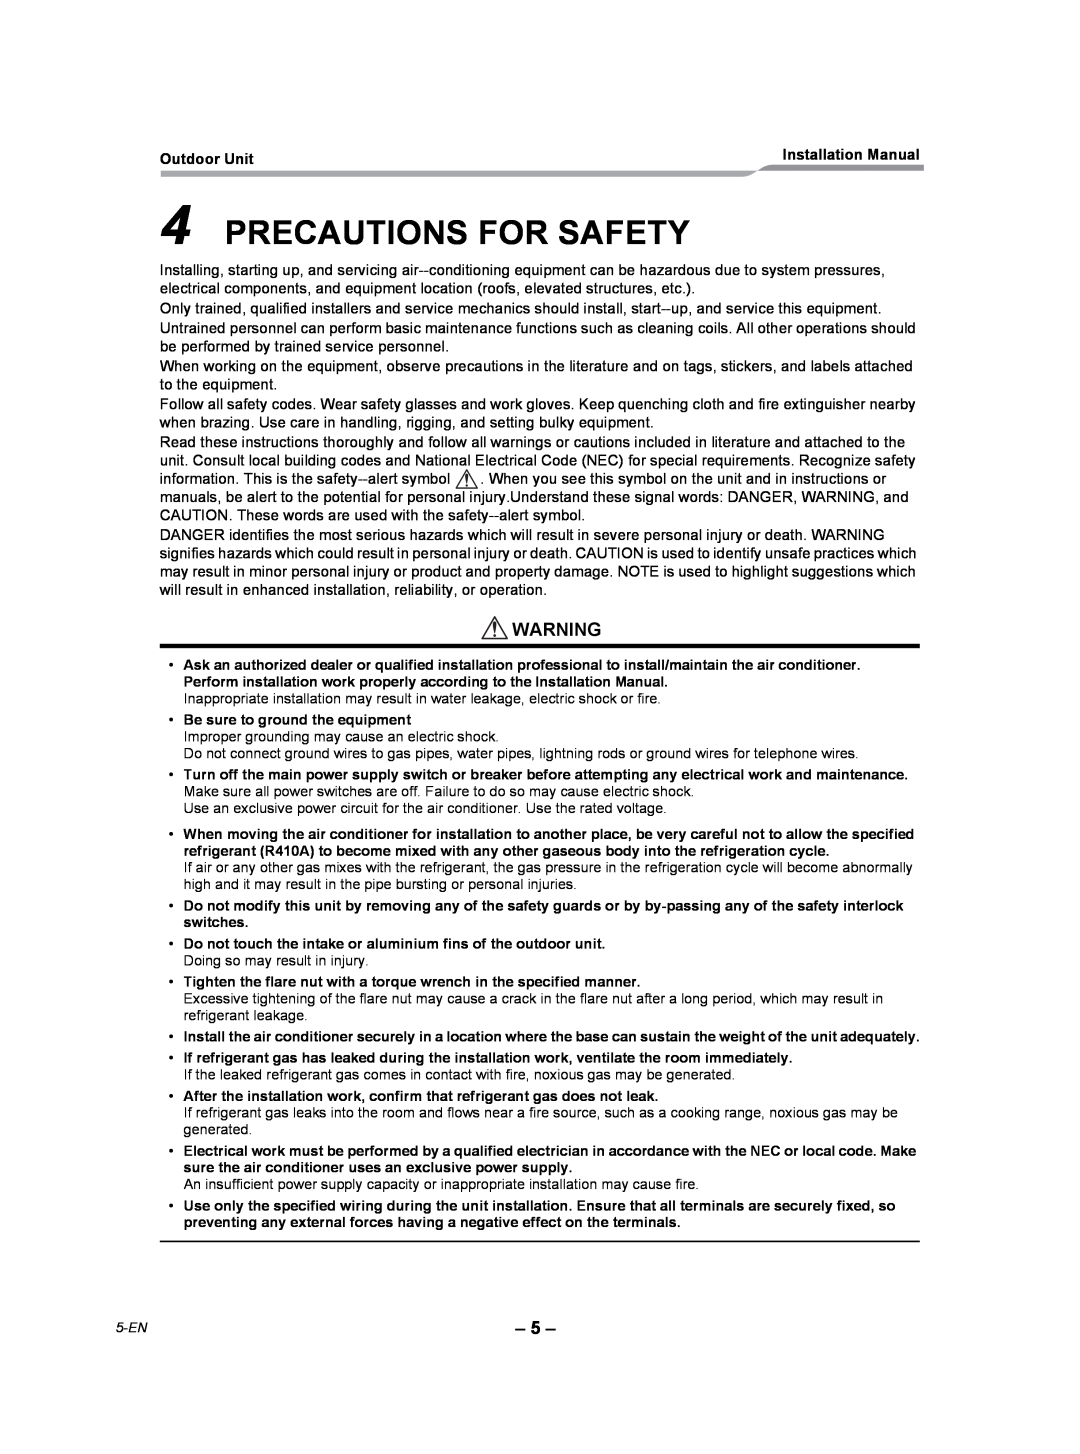 Toshiba RAV-SP240AT2-UL installation manual Precautions For Safety 